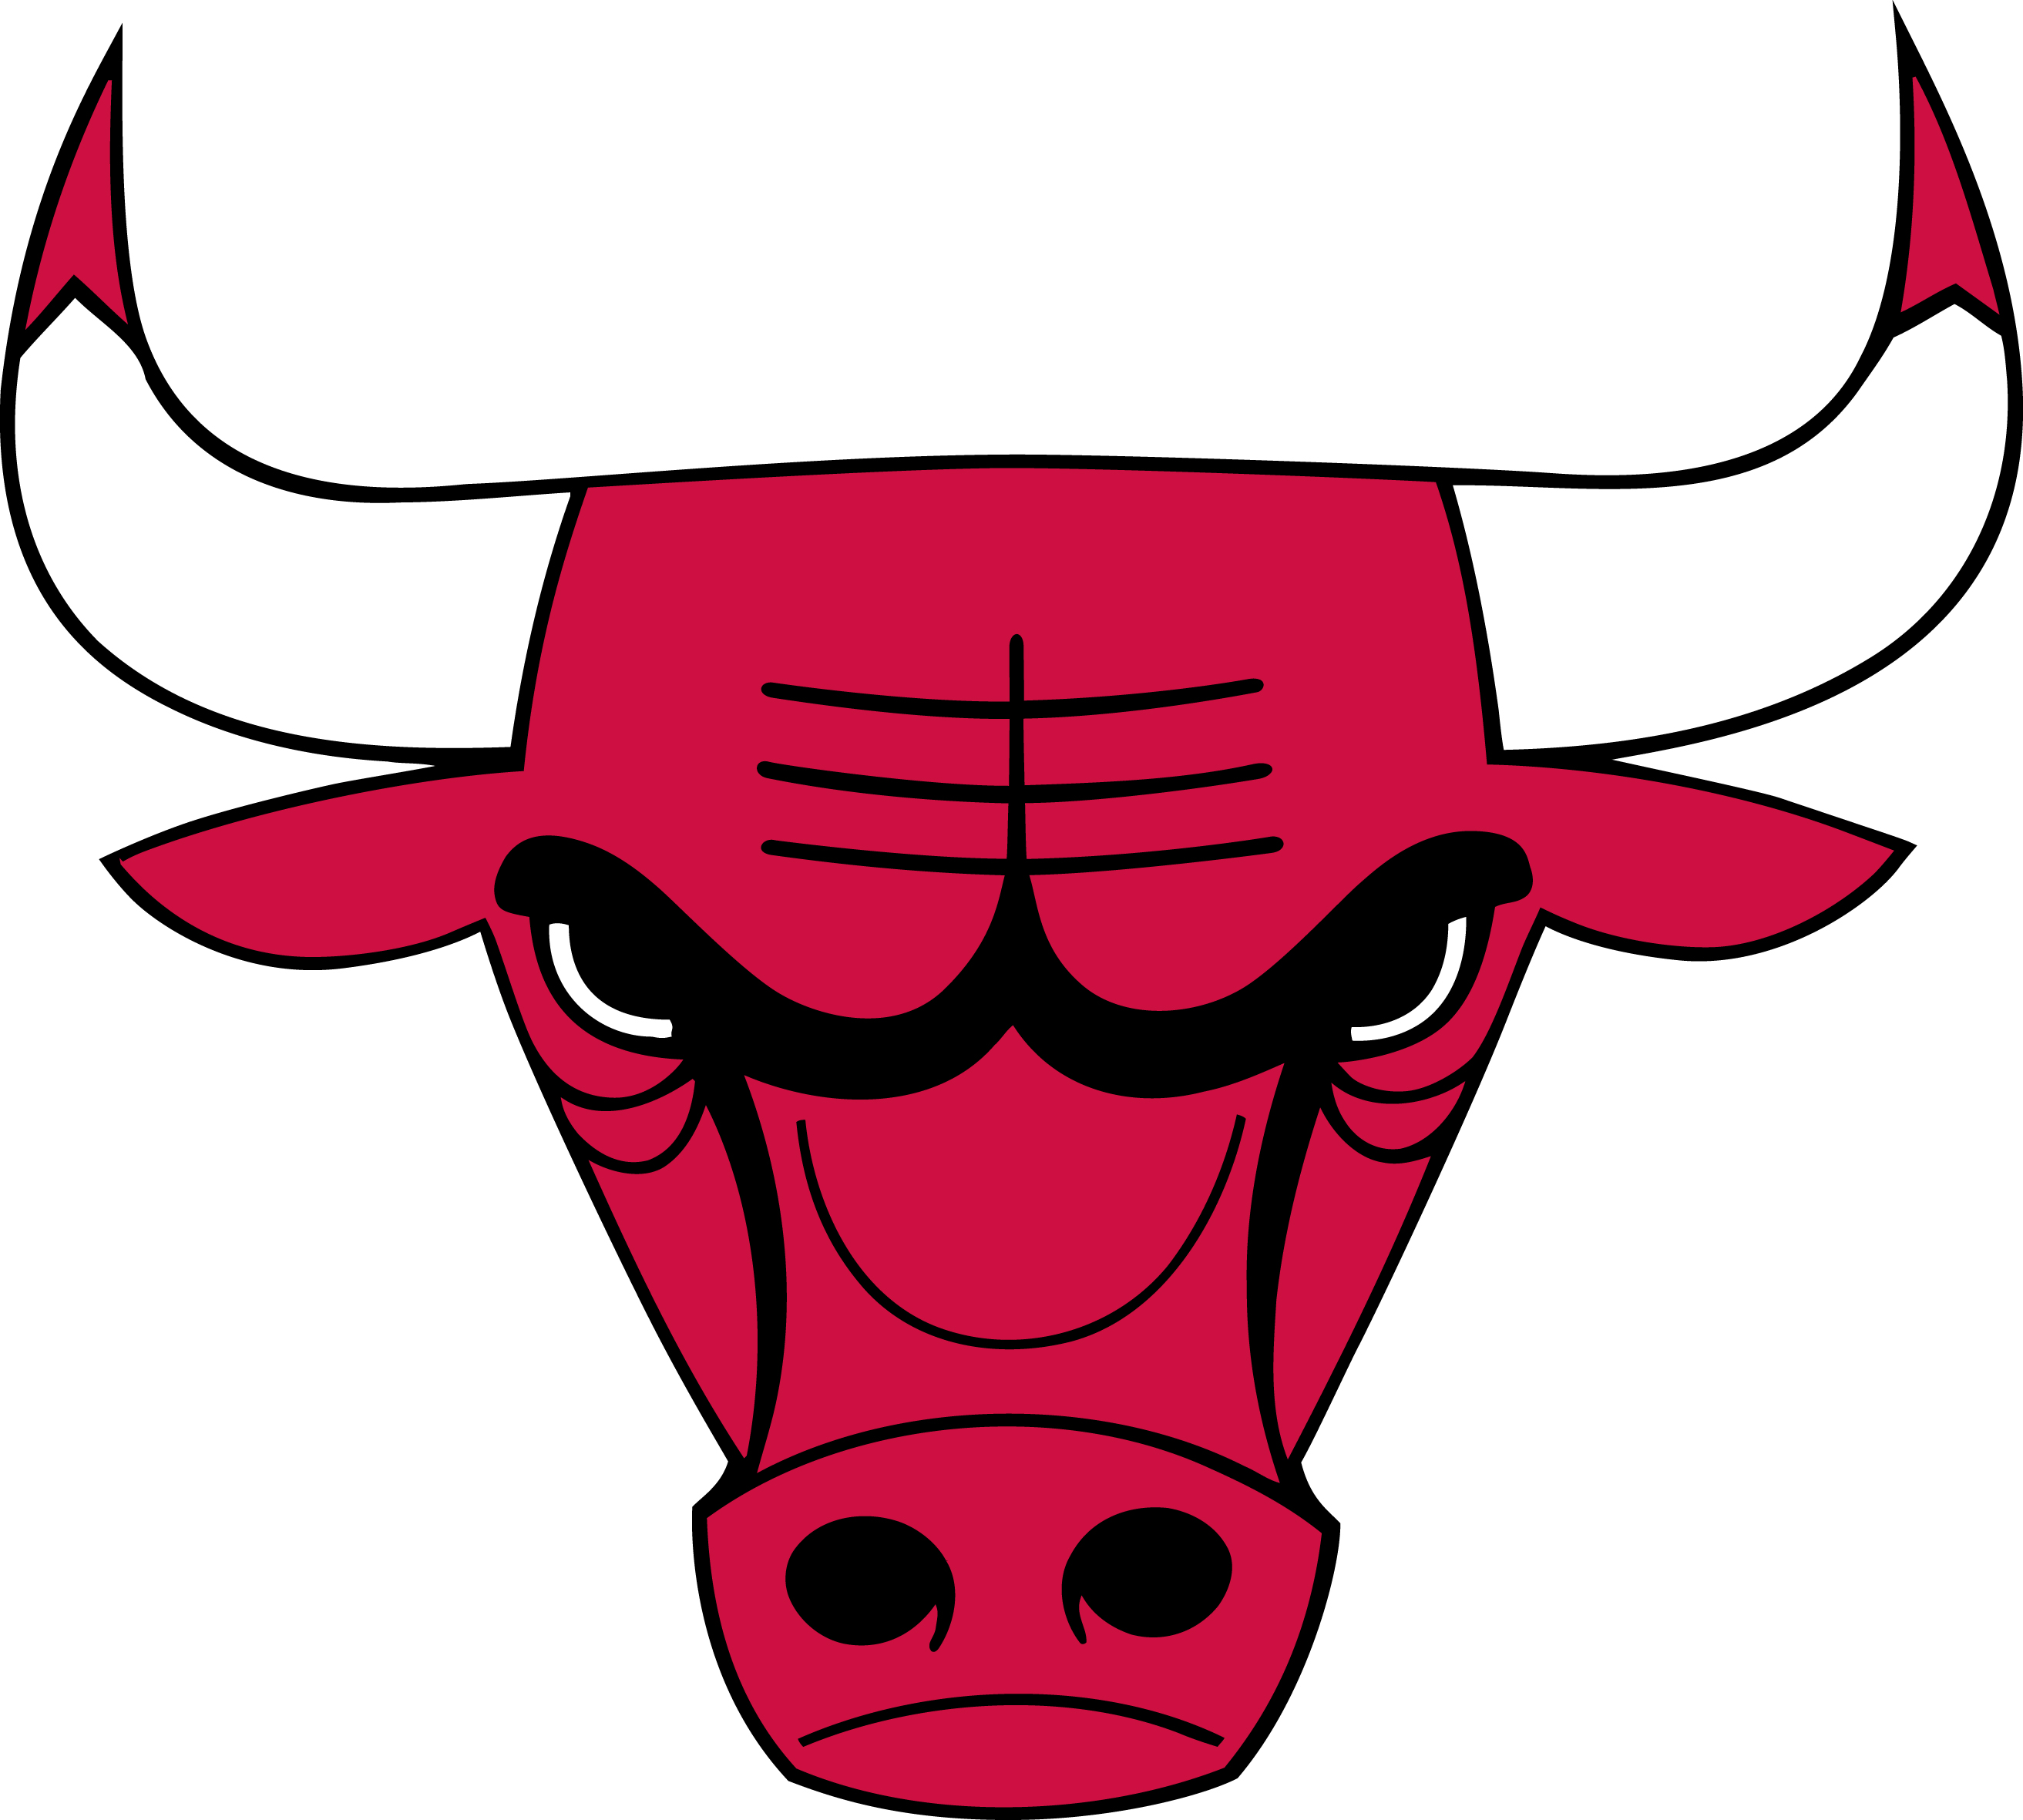 Bulls Logo Png - ClipArt Best